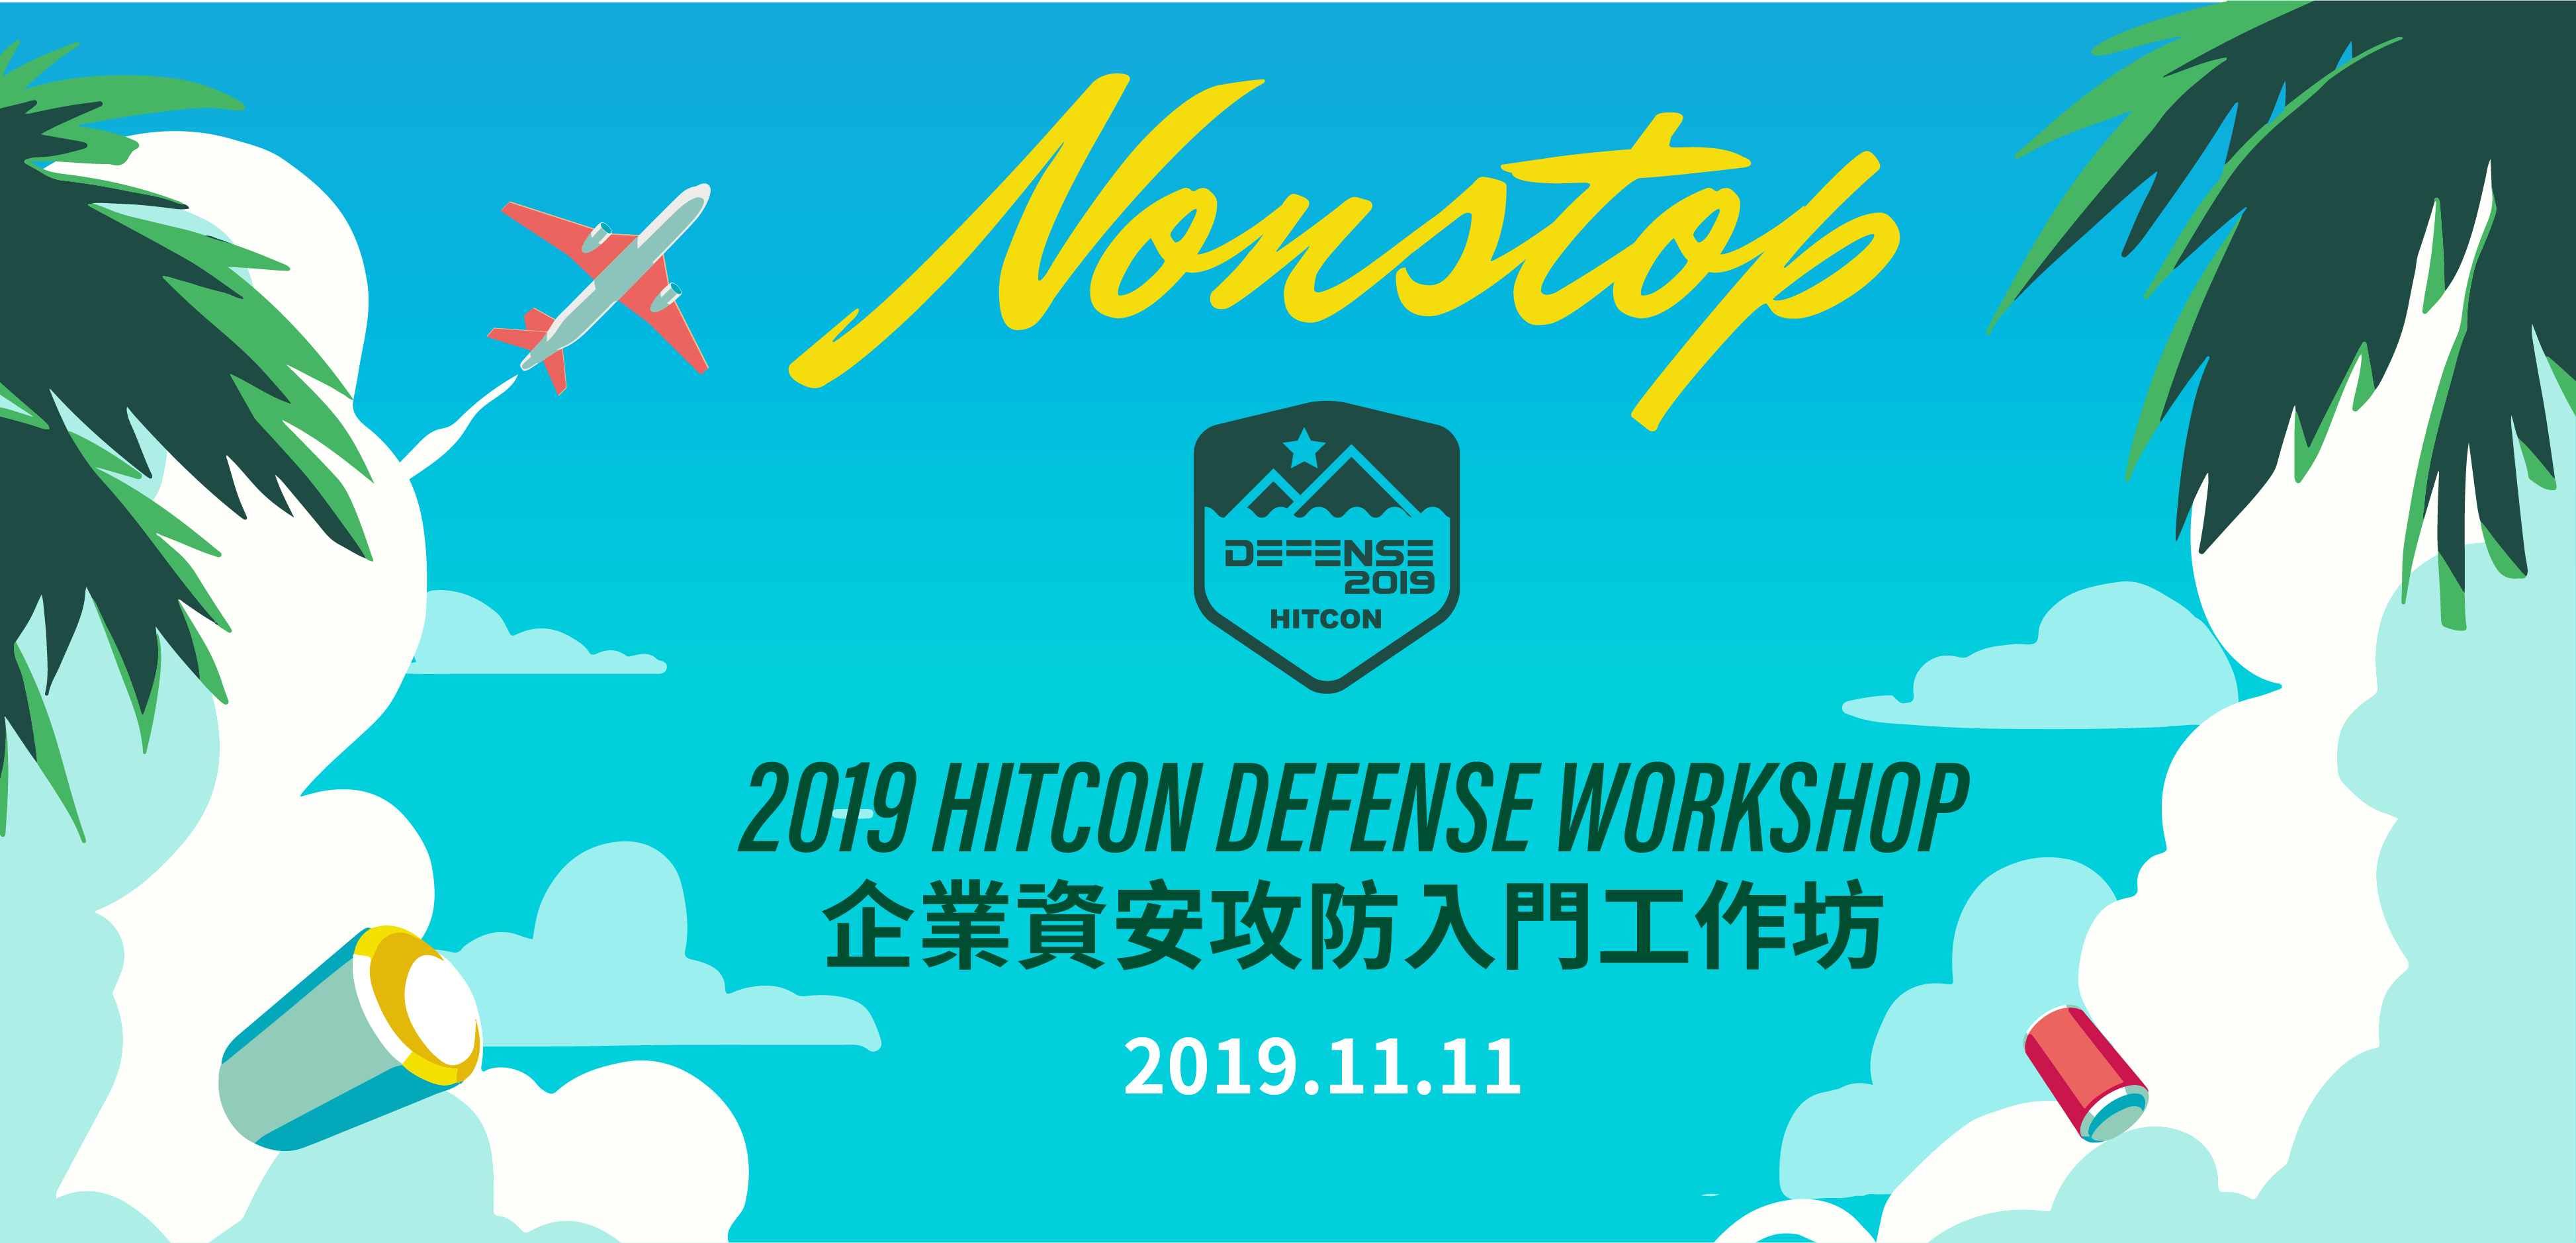 2019 HITCON DEFENSE WORKSHOP 企業資安攻防入門工作坊 2019.11.11